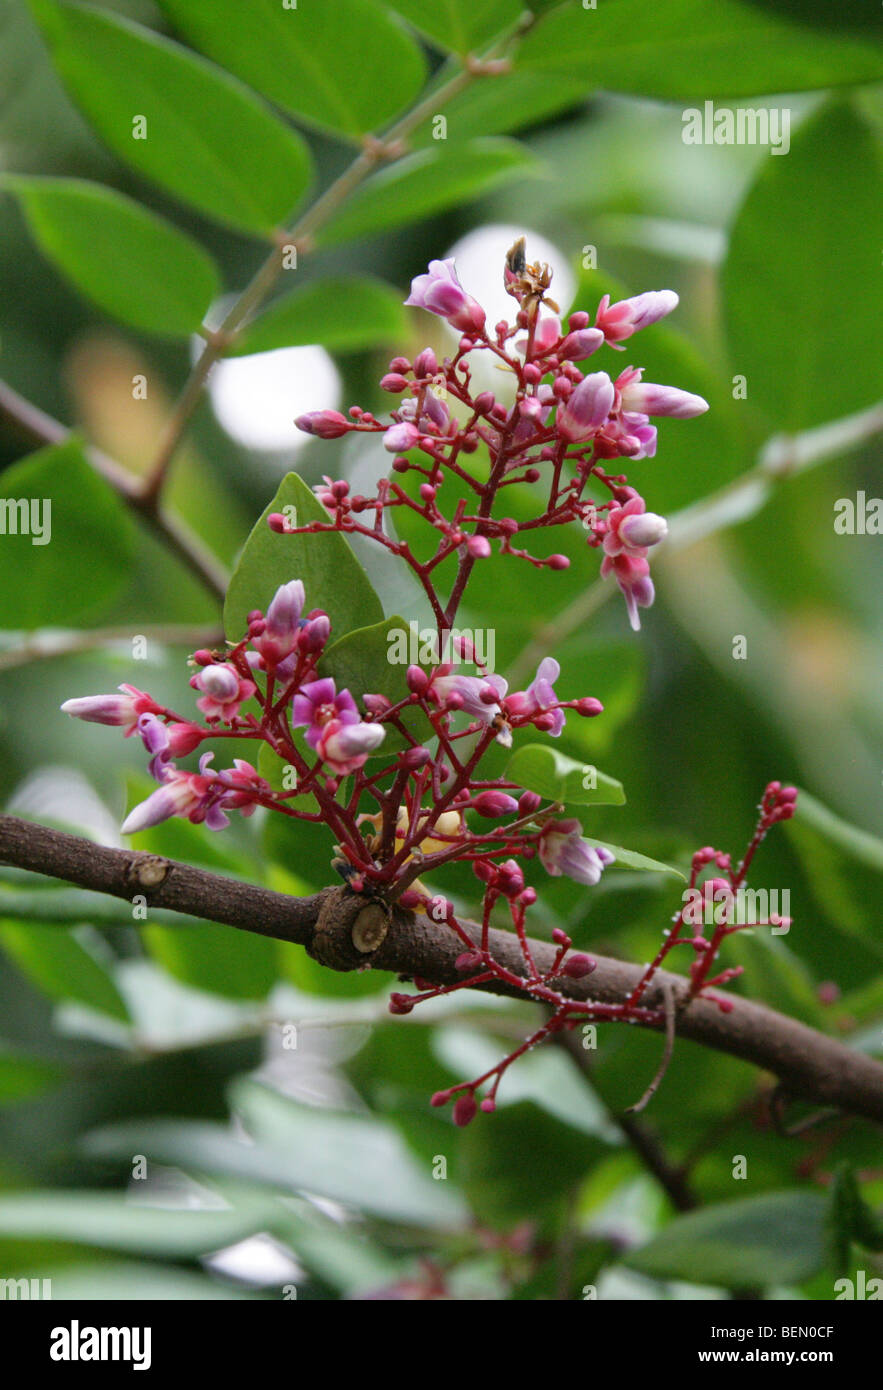 Flowers of the Carambola, Star Fruit or Starfruit Tree, Averrhoa carambola, Oxalidaceae (Averrhoaceae) Malaysia, Java, Indonesia Stock Photo